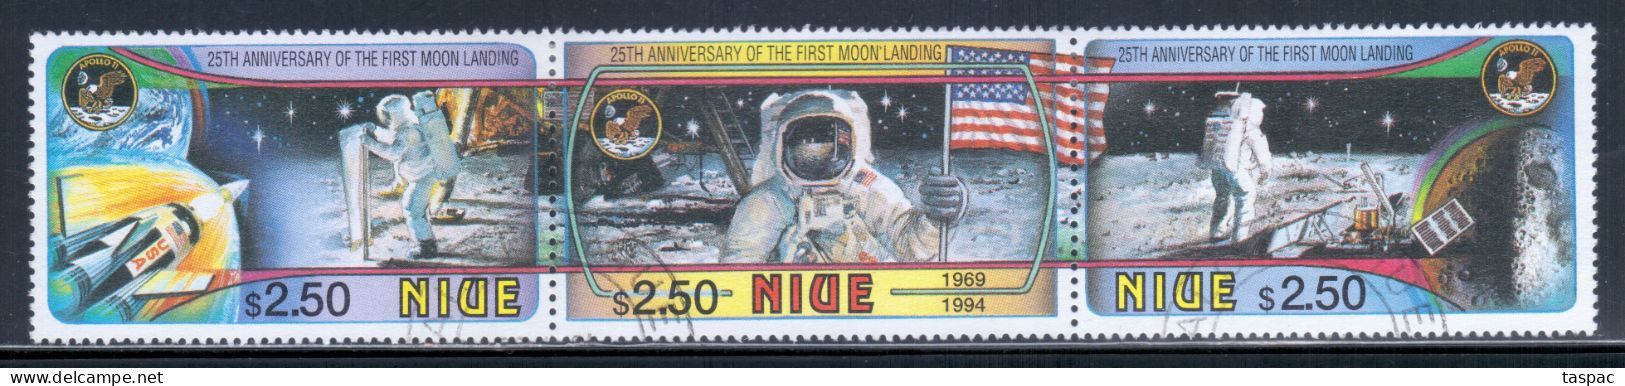 Niue 1994 Mi# 842-844 Used - Strip Of 3 - First Manned Moon Landing, 25th Anniv. / Space - Oceanía